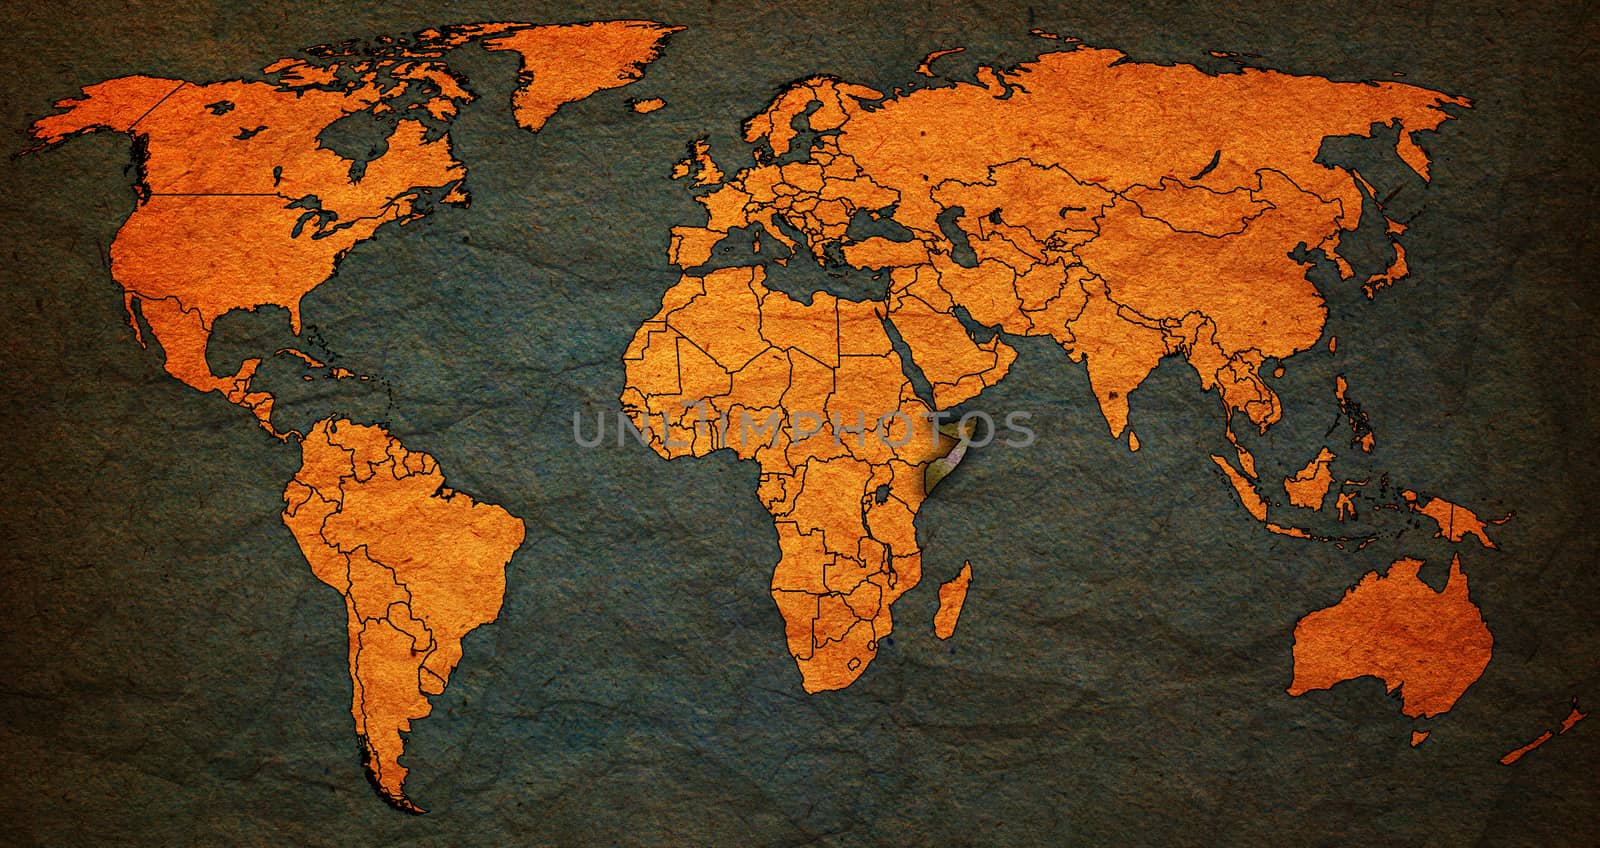 somalia flag on old vintage world map with national borders